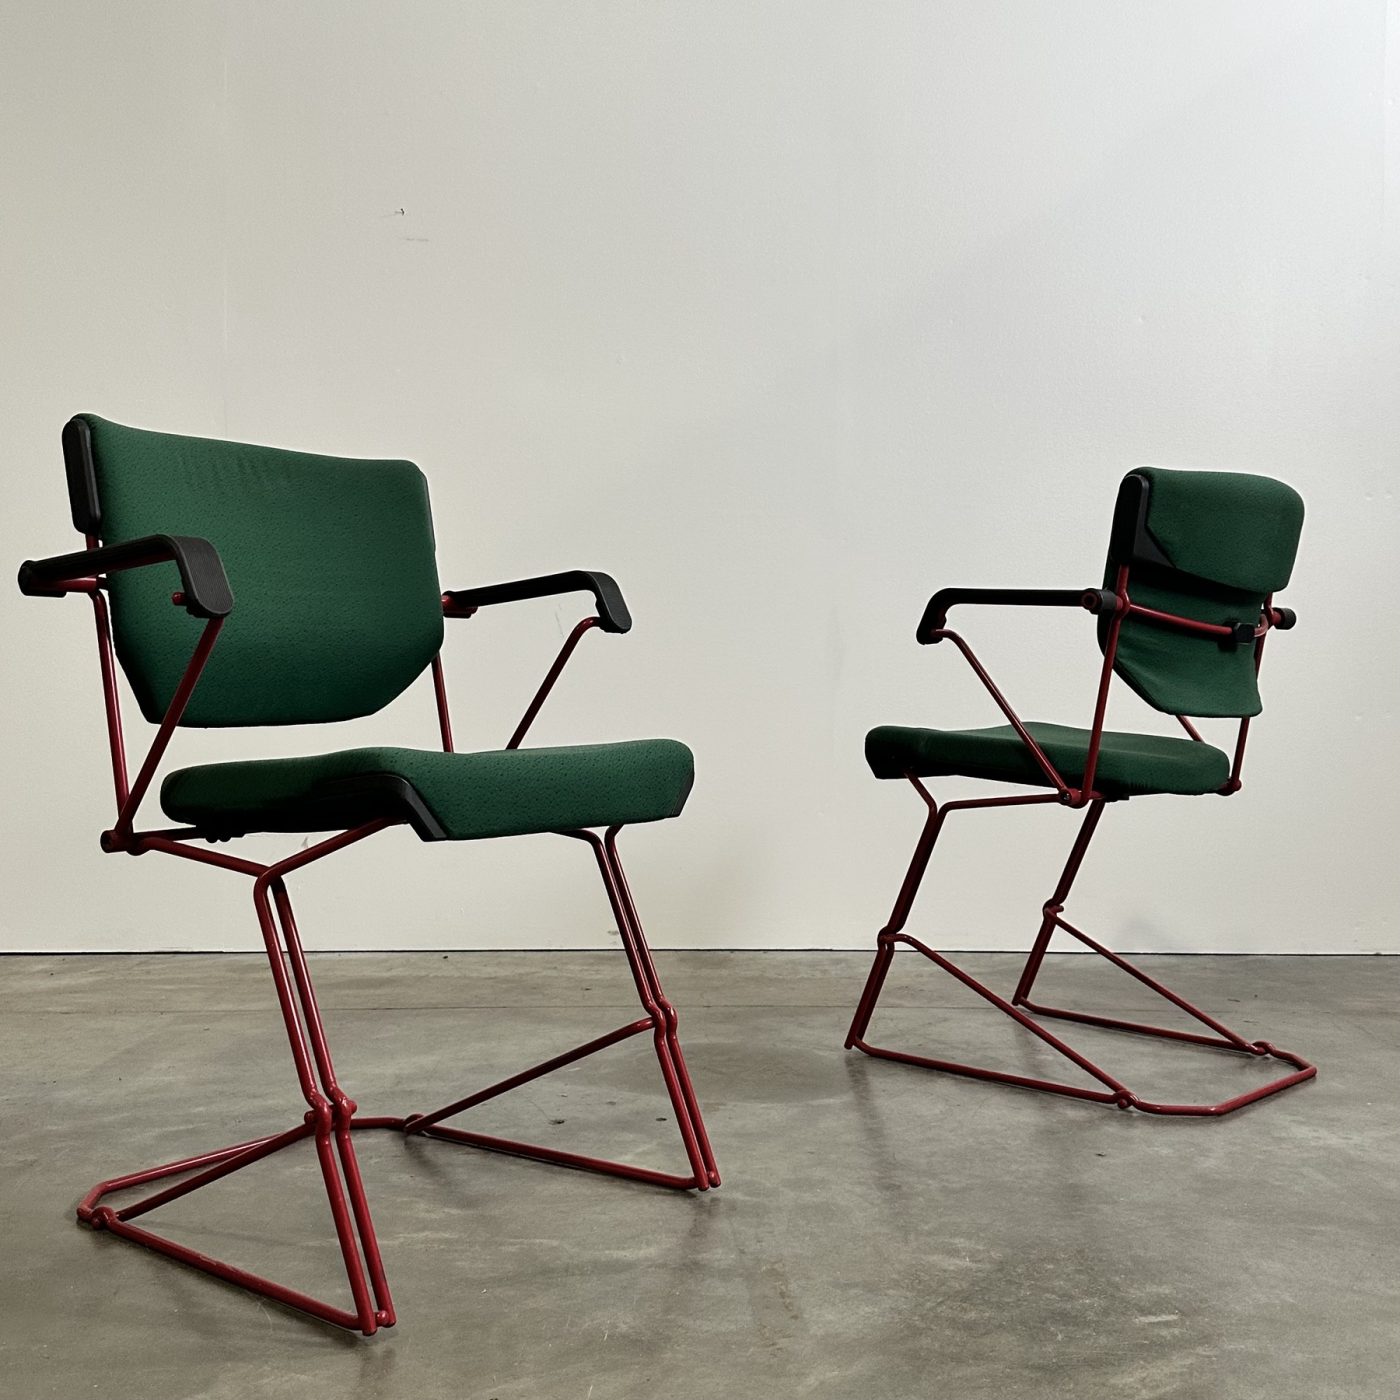 objet-vagabond-design-armchairs0003